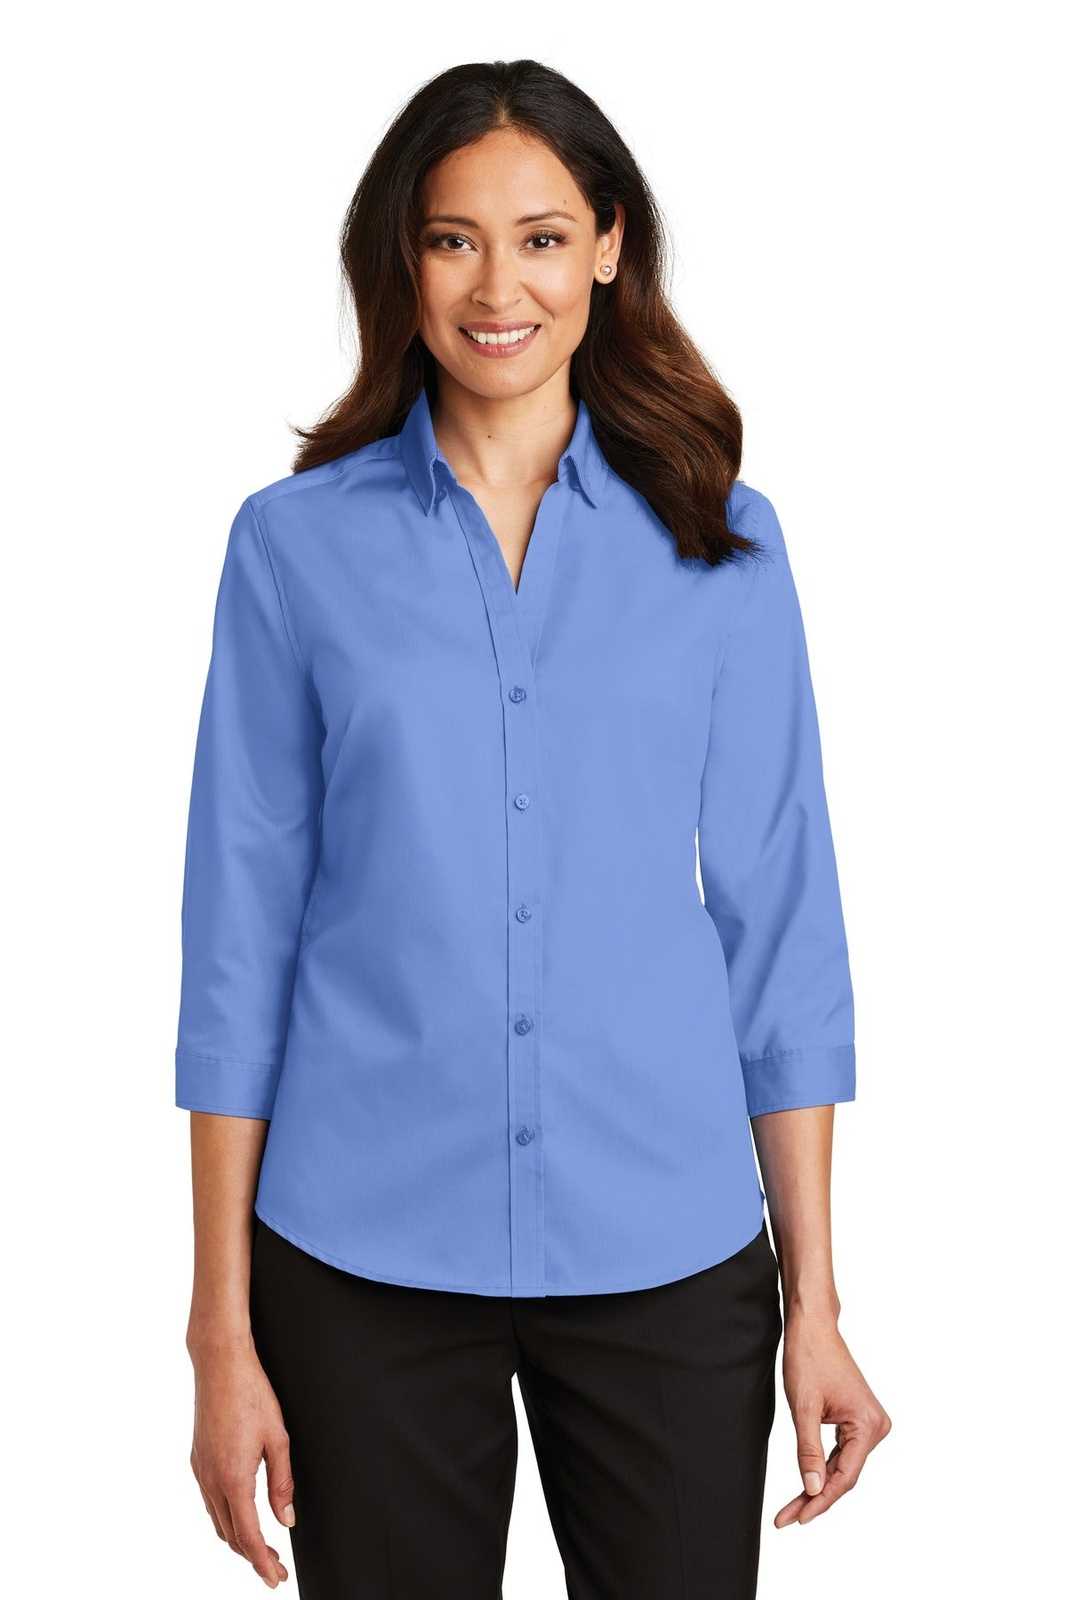 Port Authority L665 Ladies 3/4-Sleeve Superpro Twill Shirt - Ultramarine Blue - HIT a Double - 1